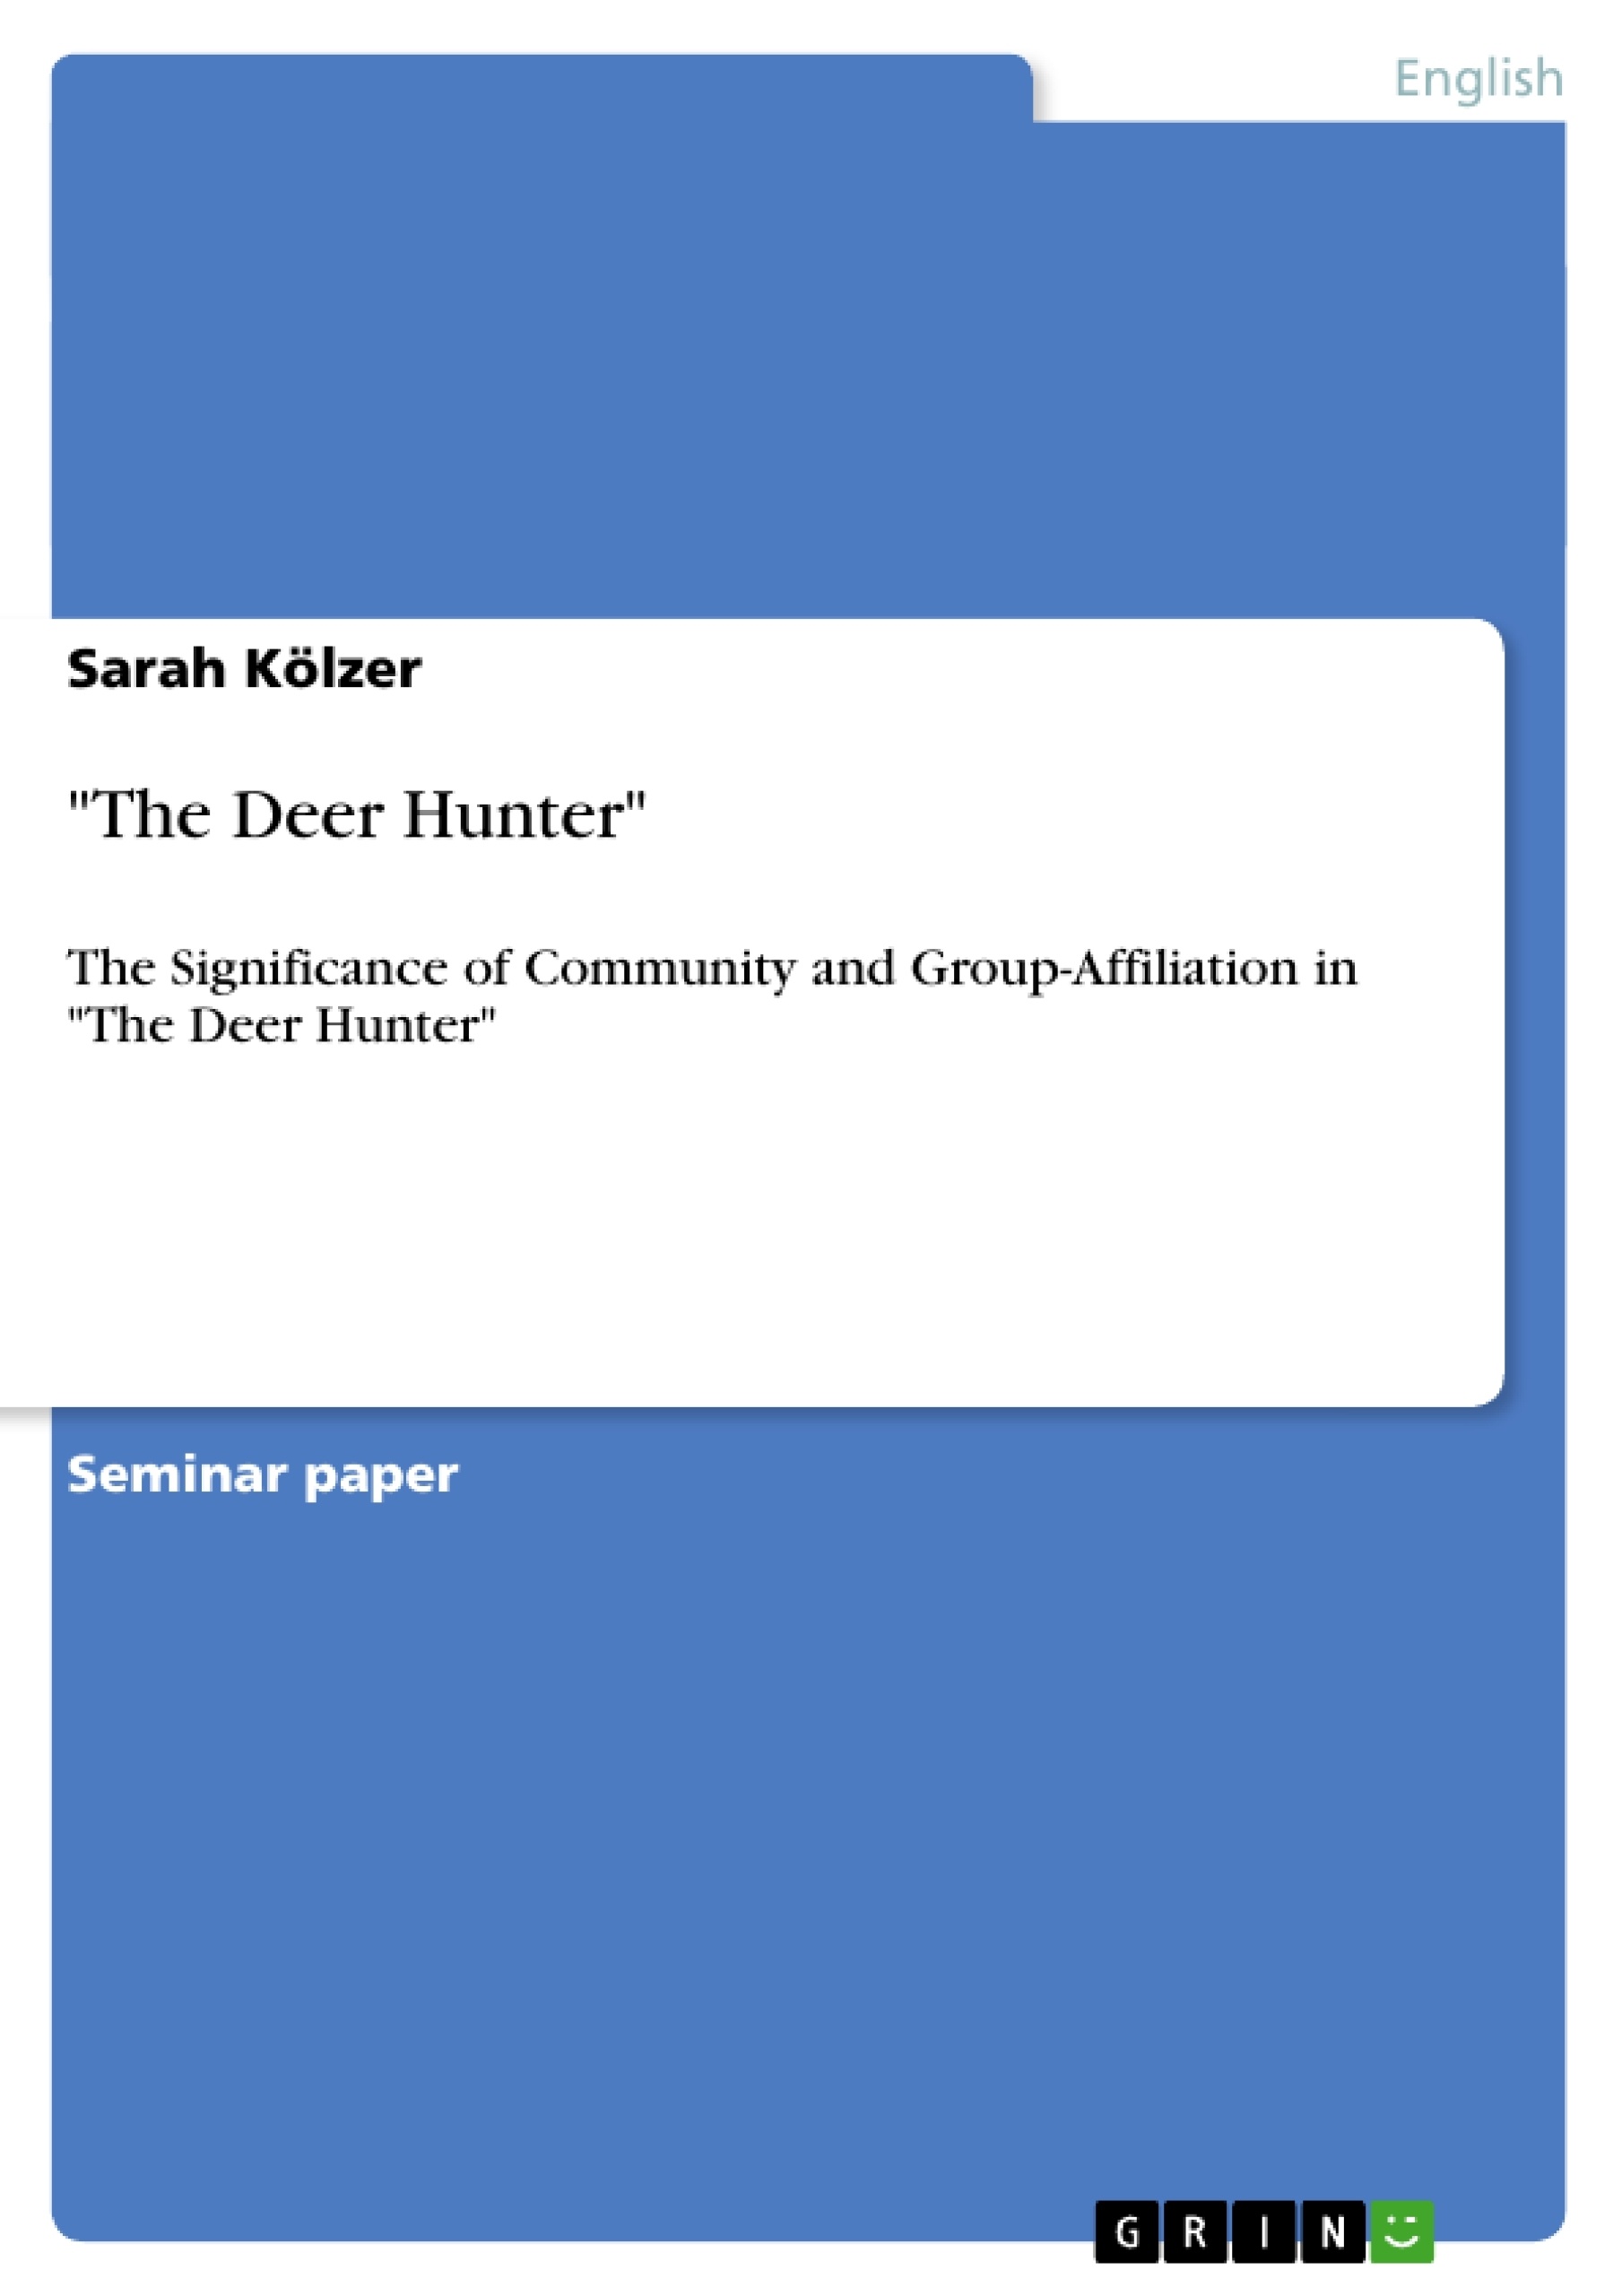 Título: "The Deer Hunter"